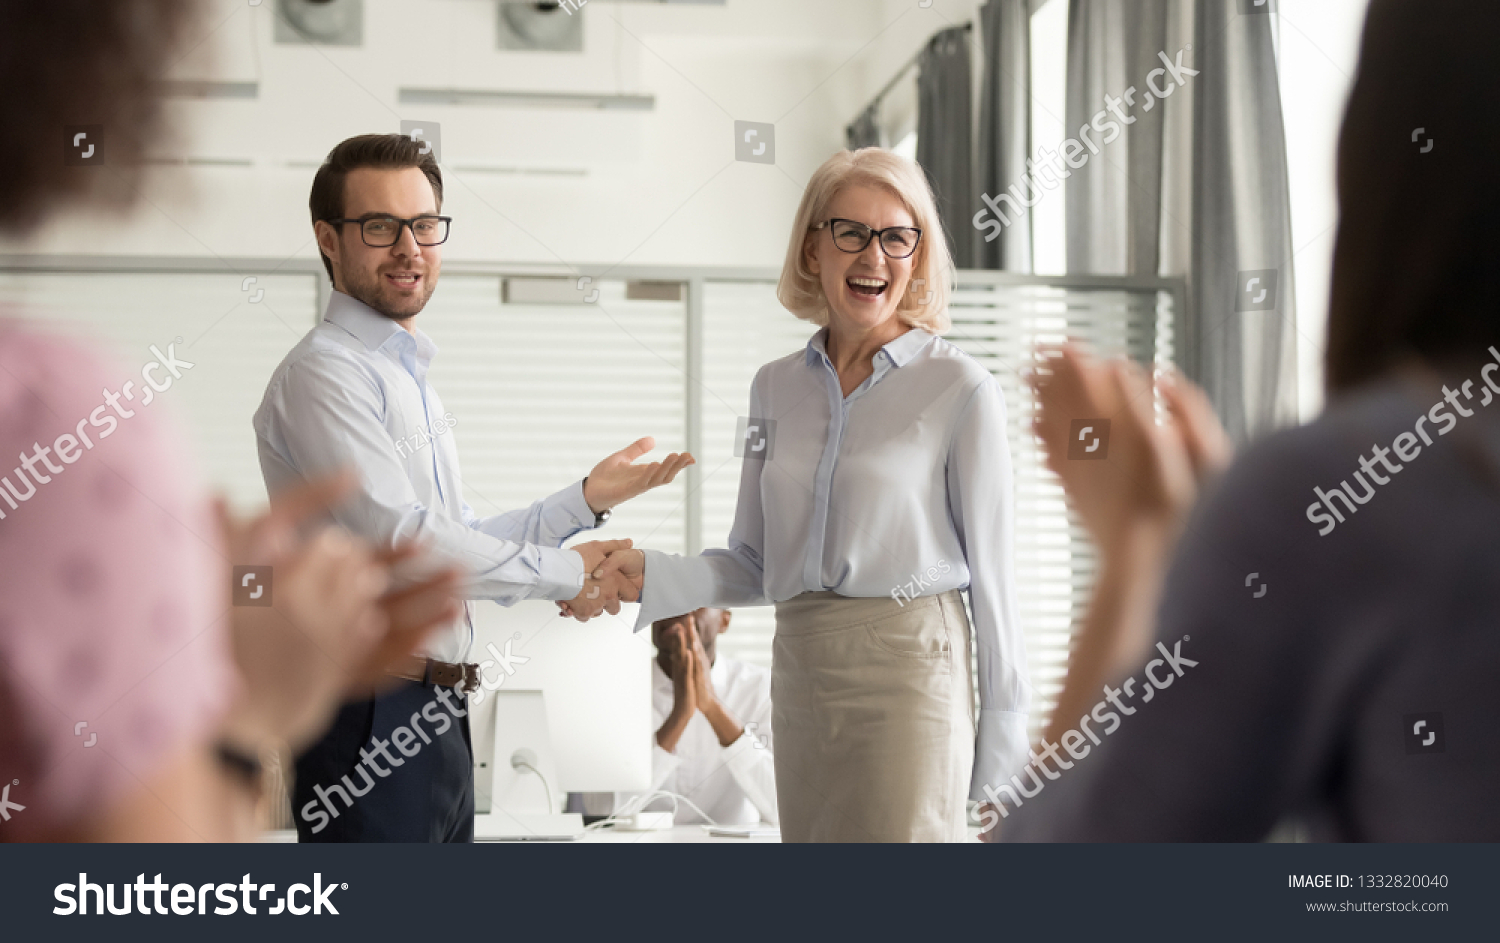 Happy manager boss praising old employee for good work get team appreciation acknowledgement handshaking successful worker congratulating promoting rewarding welcoming new partner, respect handshake #1332820040